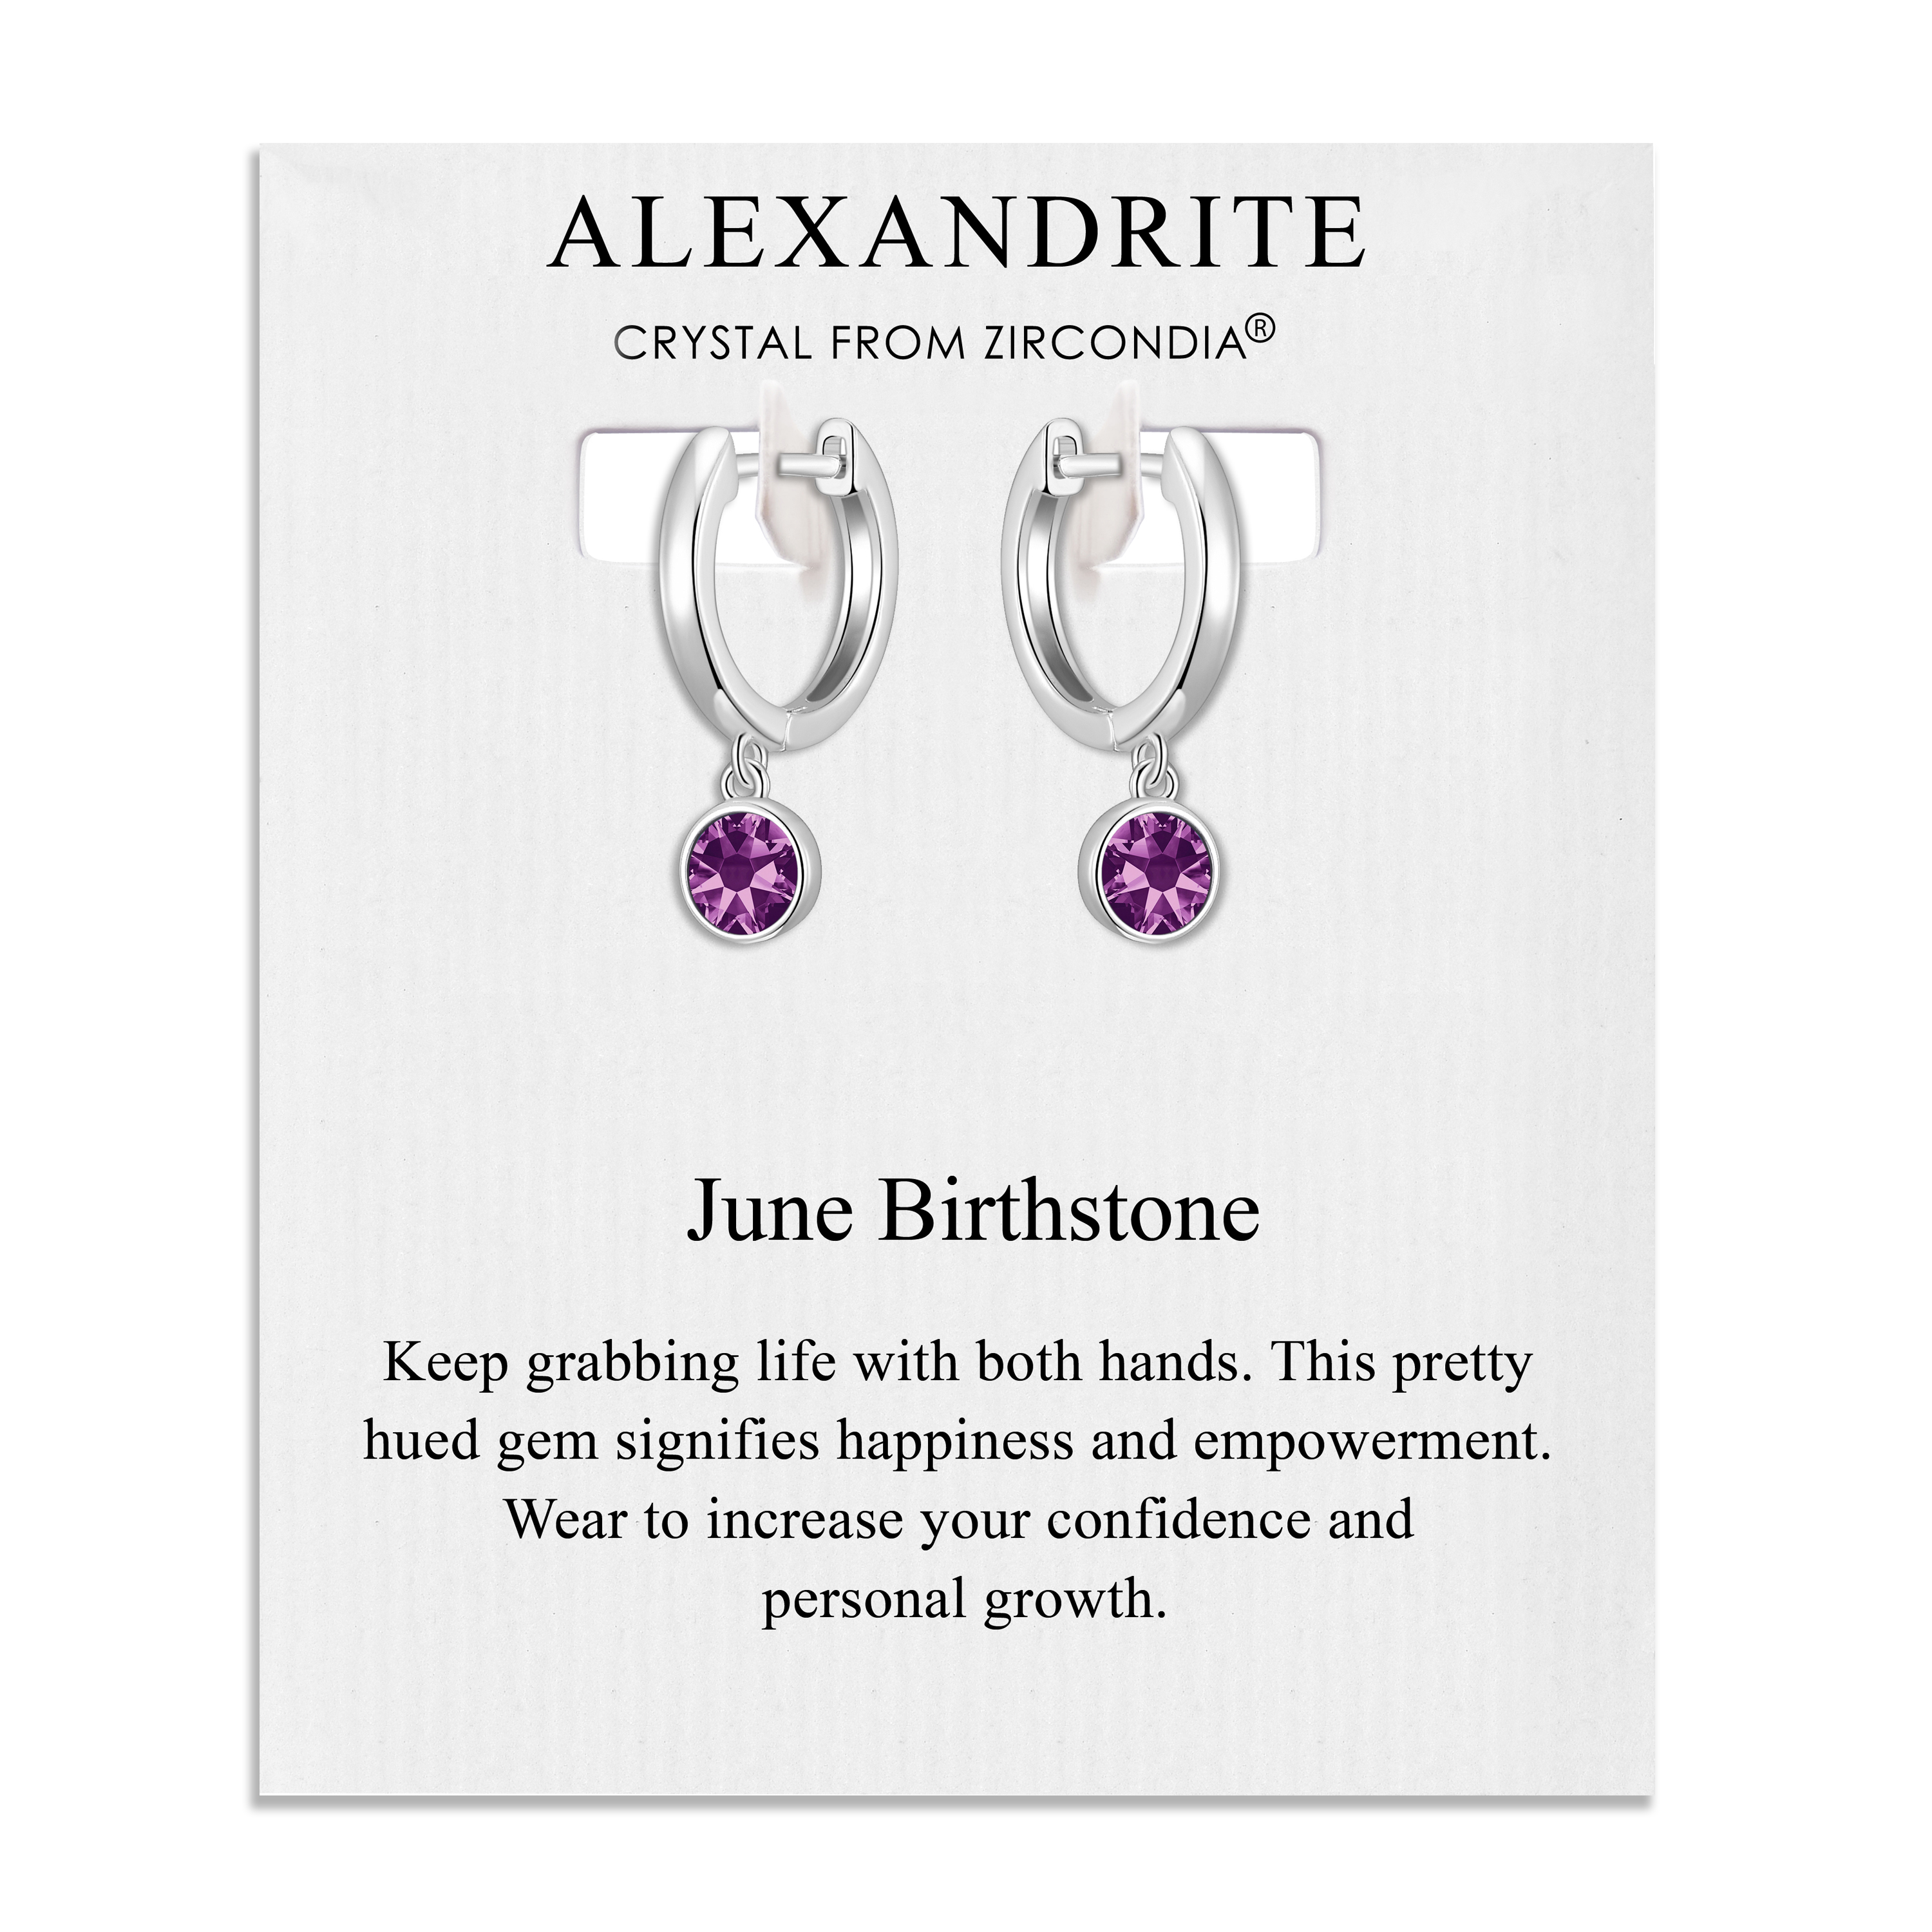 June Birthstone Hoop Earrings Created with Alexandrite Zircondia® Crystals by Philip Jones Jewellery